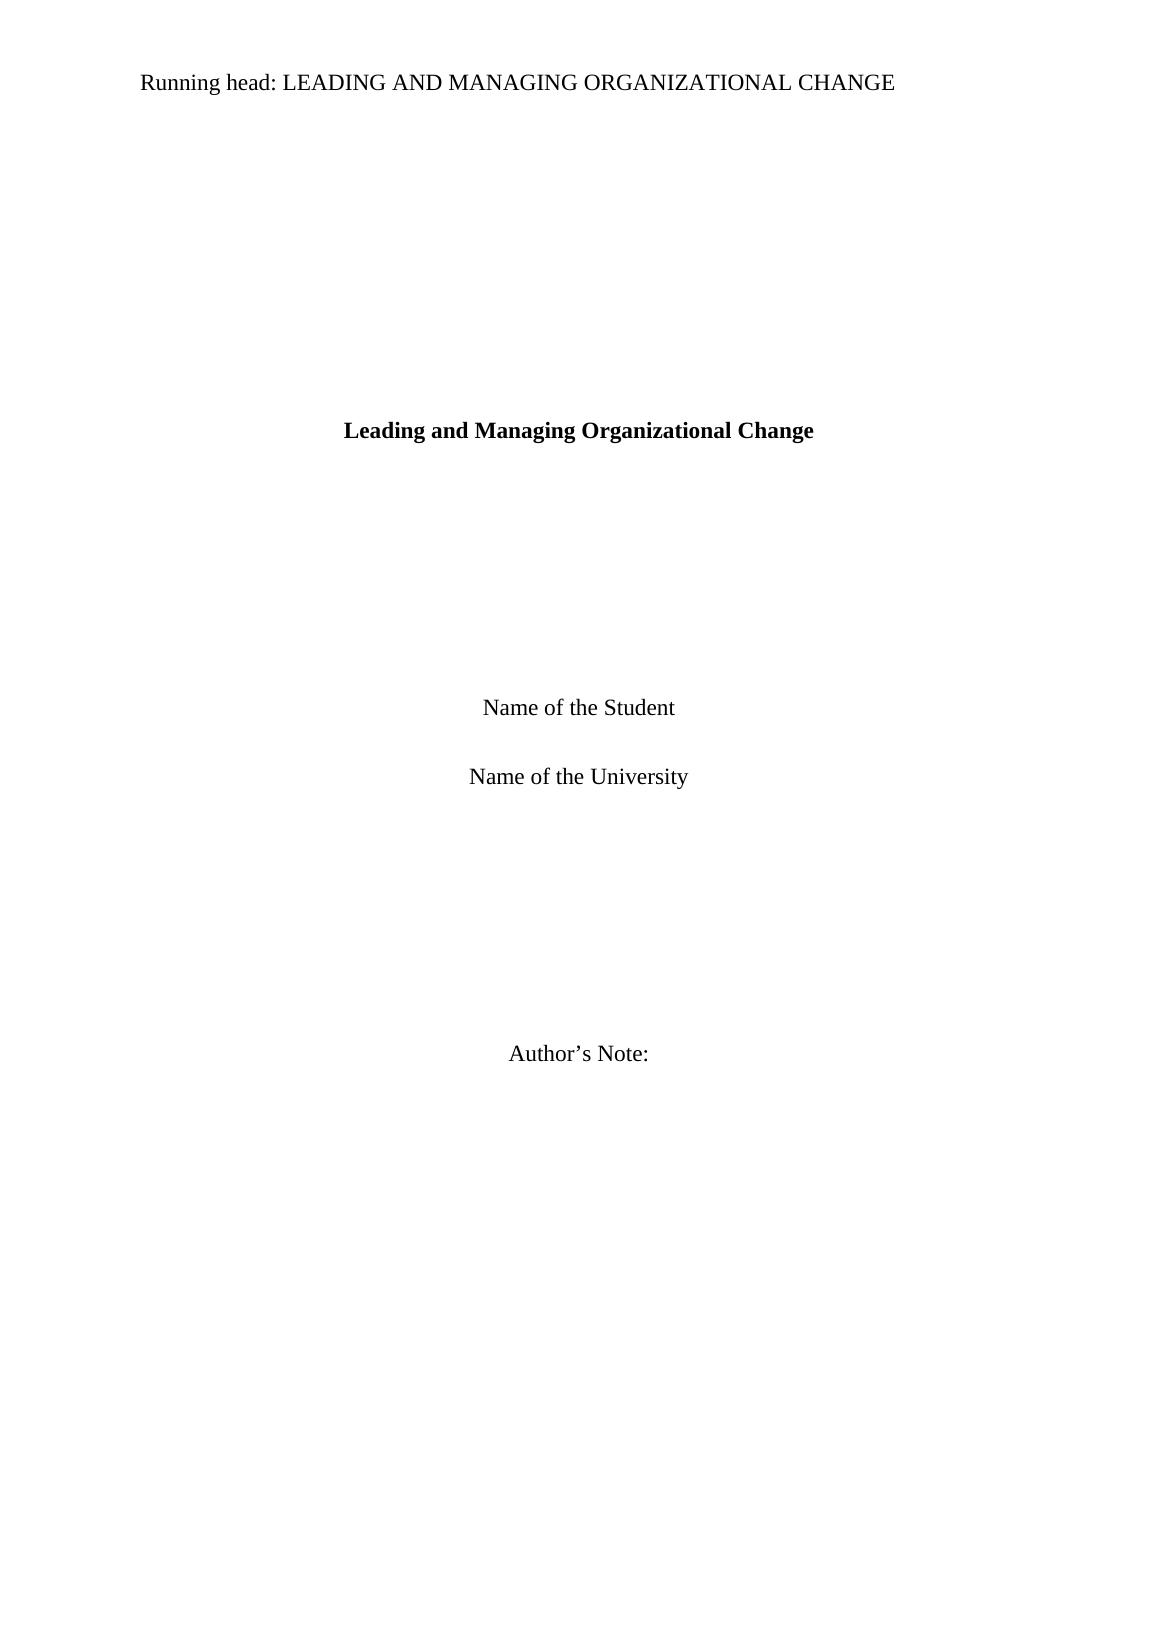 Leading and Managing Organizational Change | Study_1